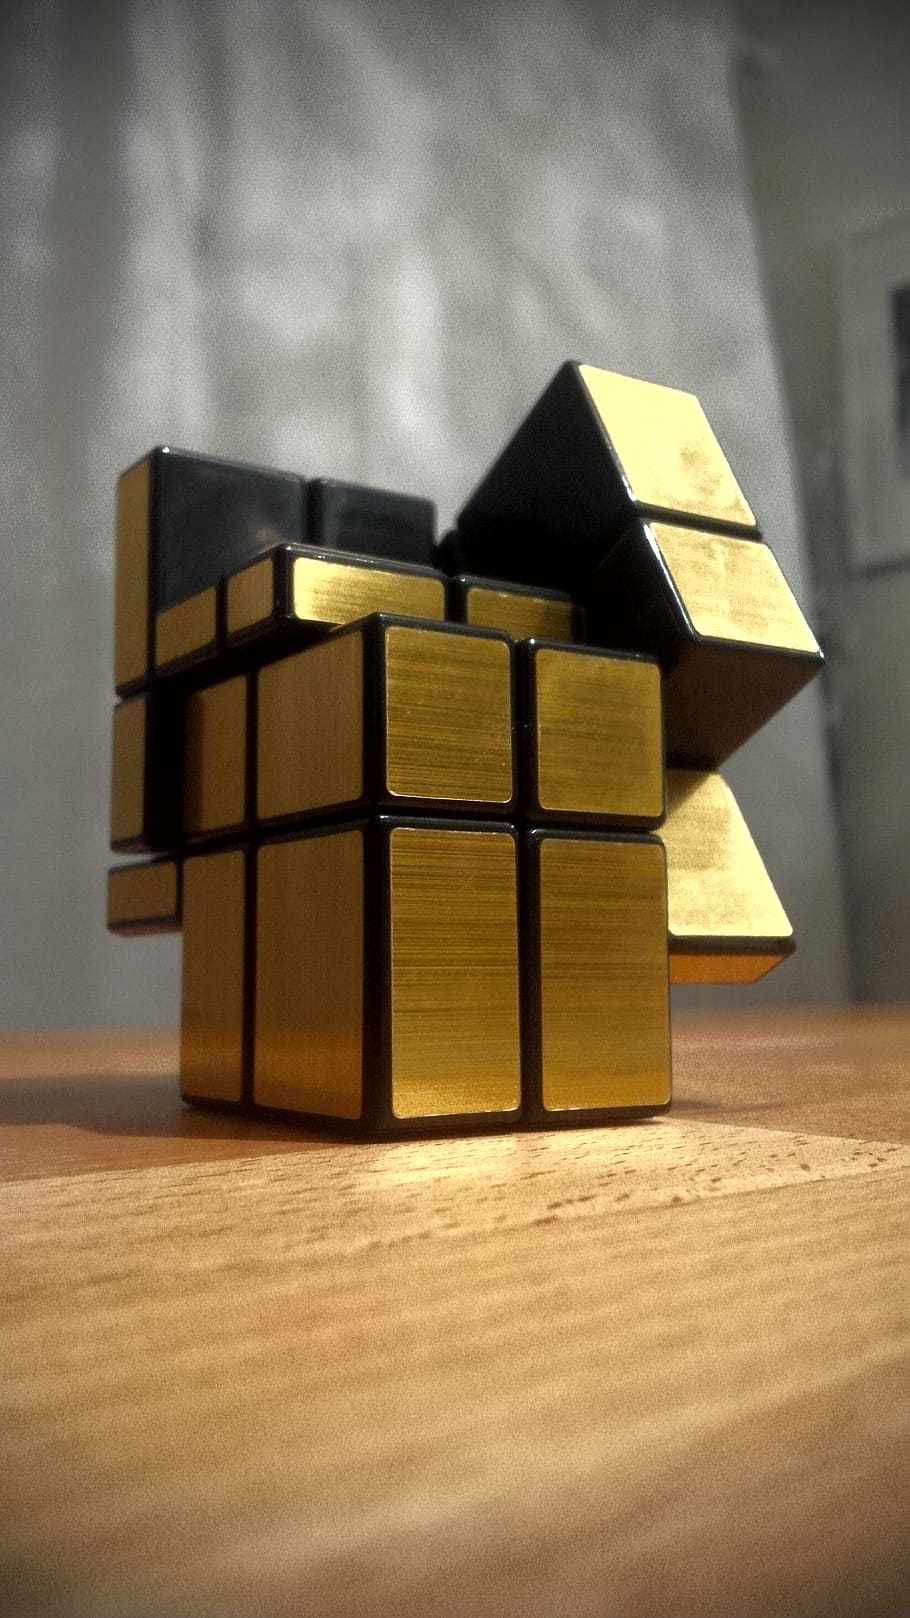 wood, rubix cube, furniture, hardwood, floor, gold, toy, treasure